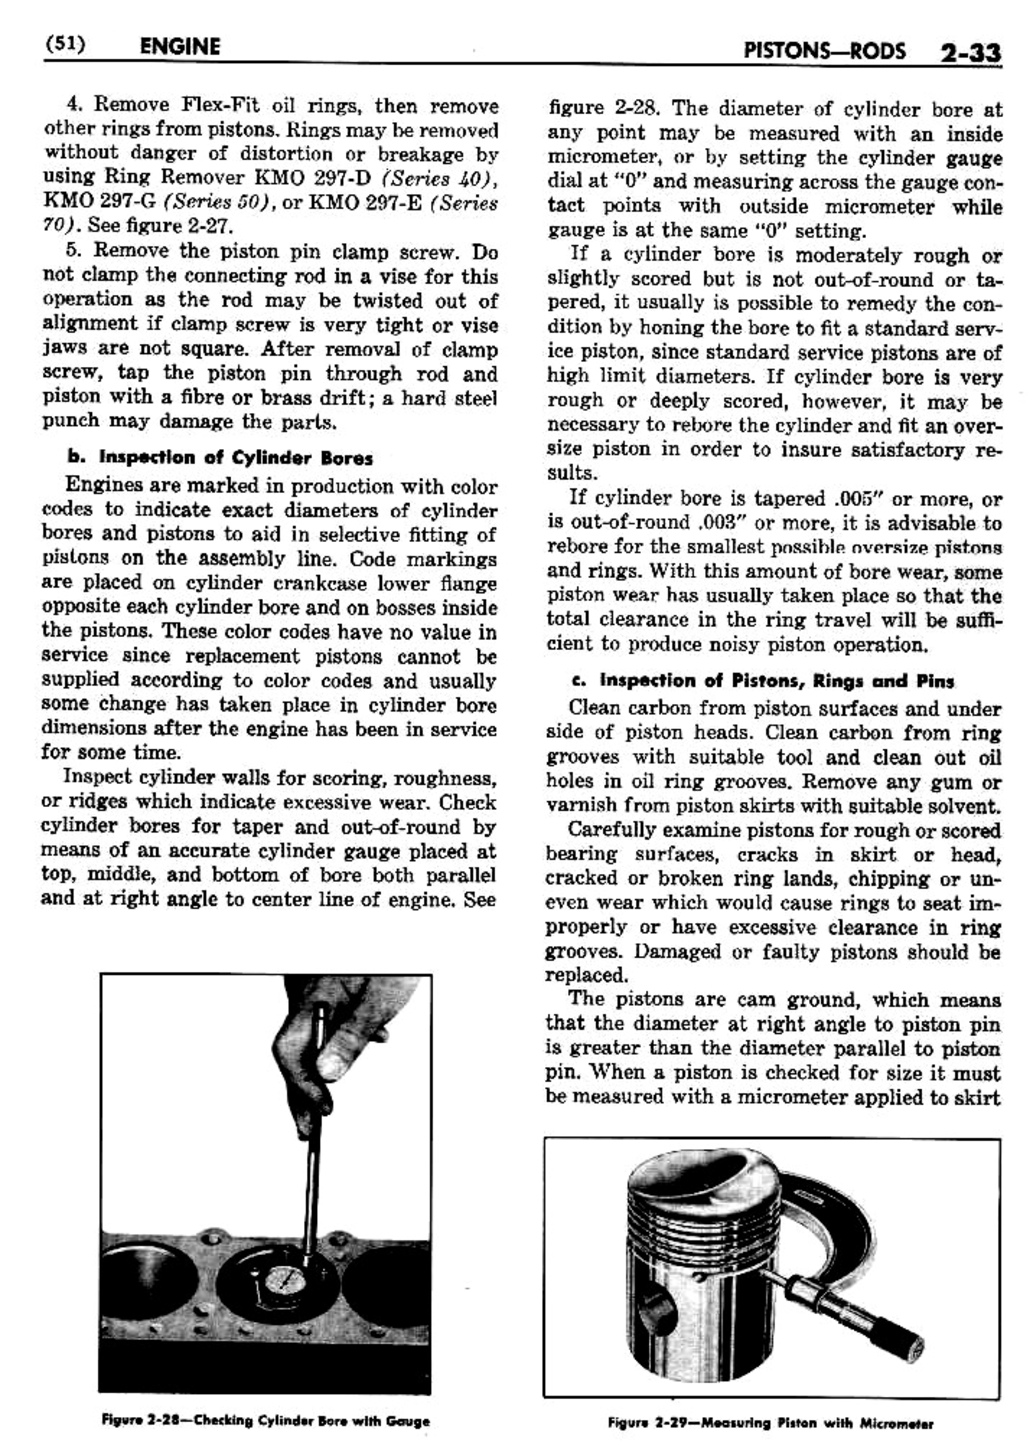 n_03 1950 Buick Shop Manual - Engine-033-033.jpg